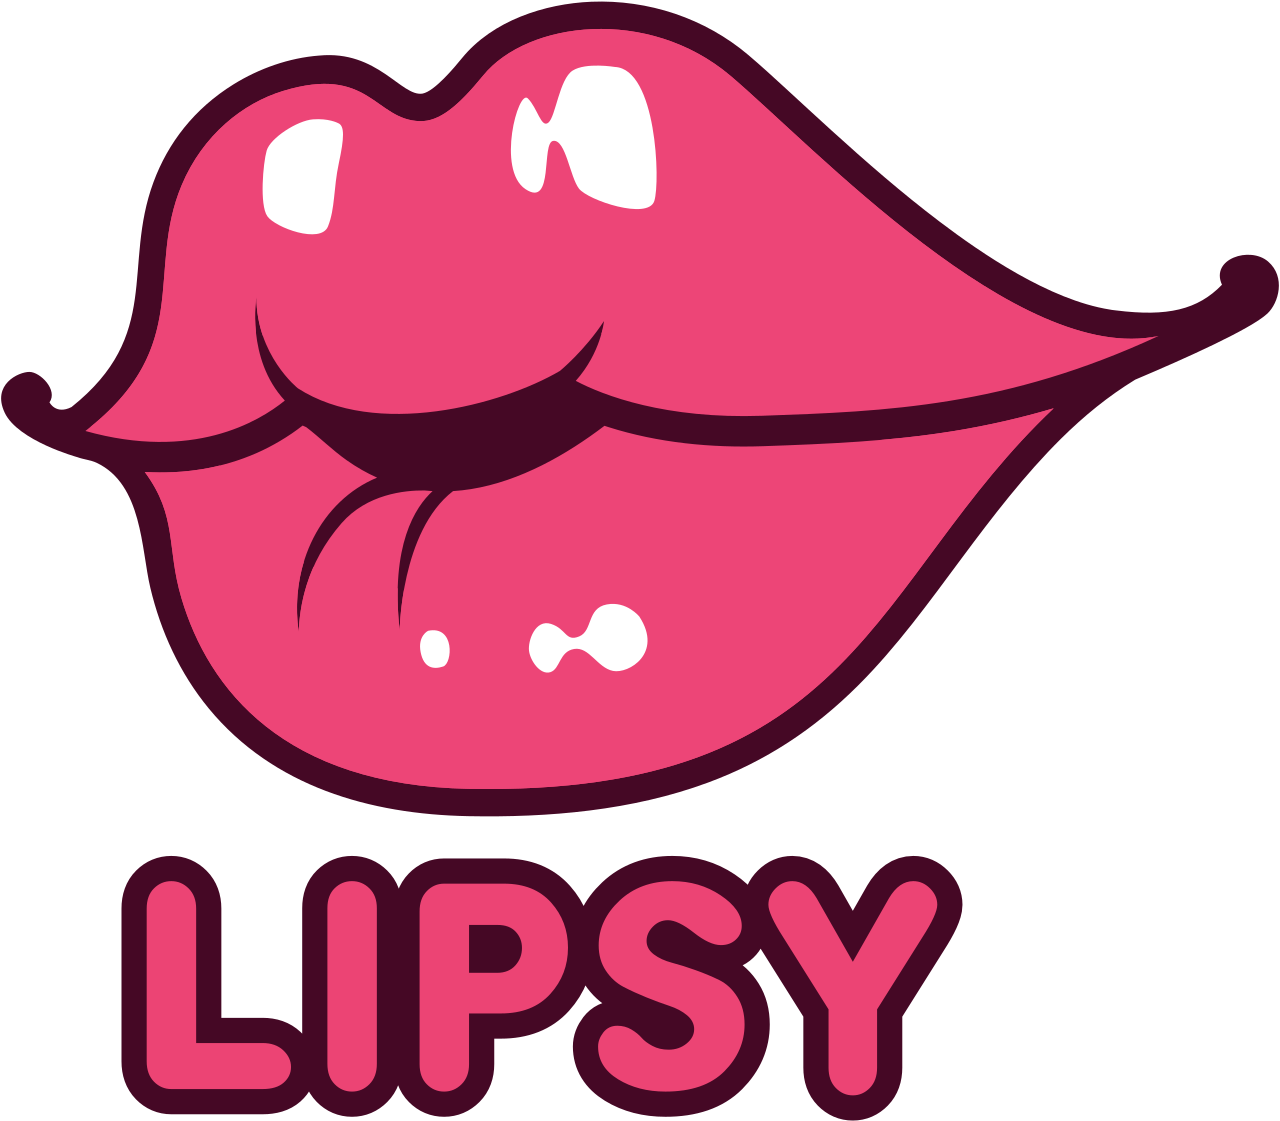 Lipsy's web page